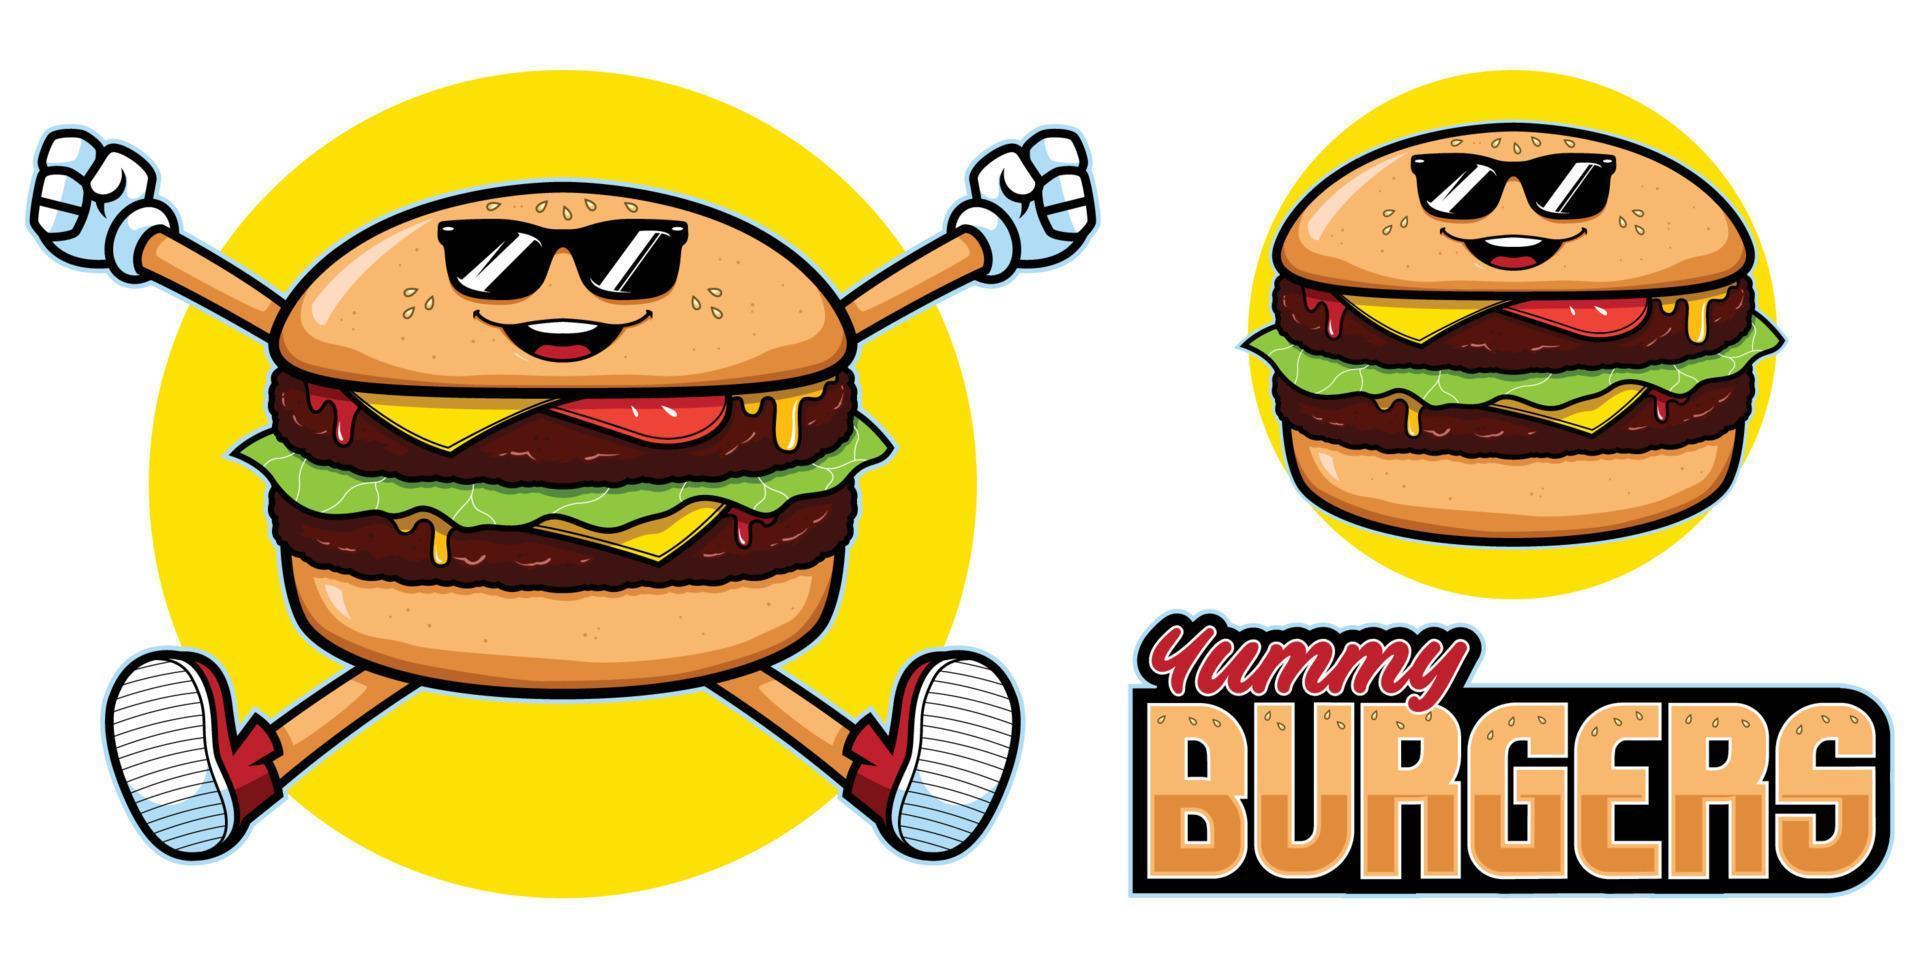 Yummy Burgers Mascot vector